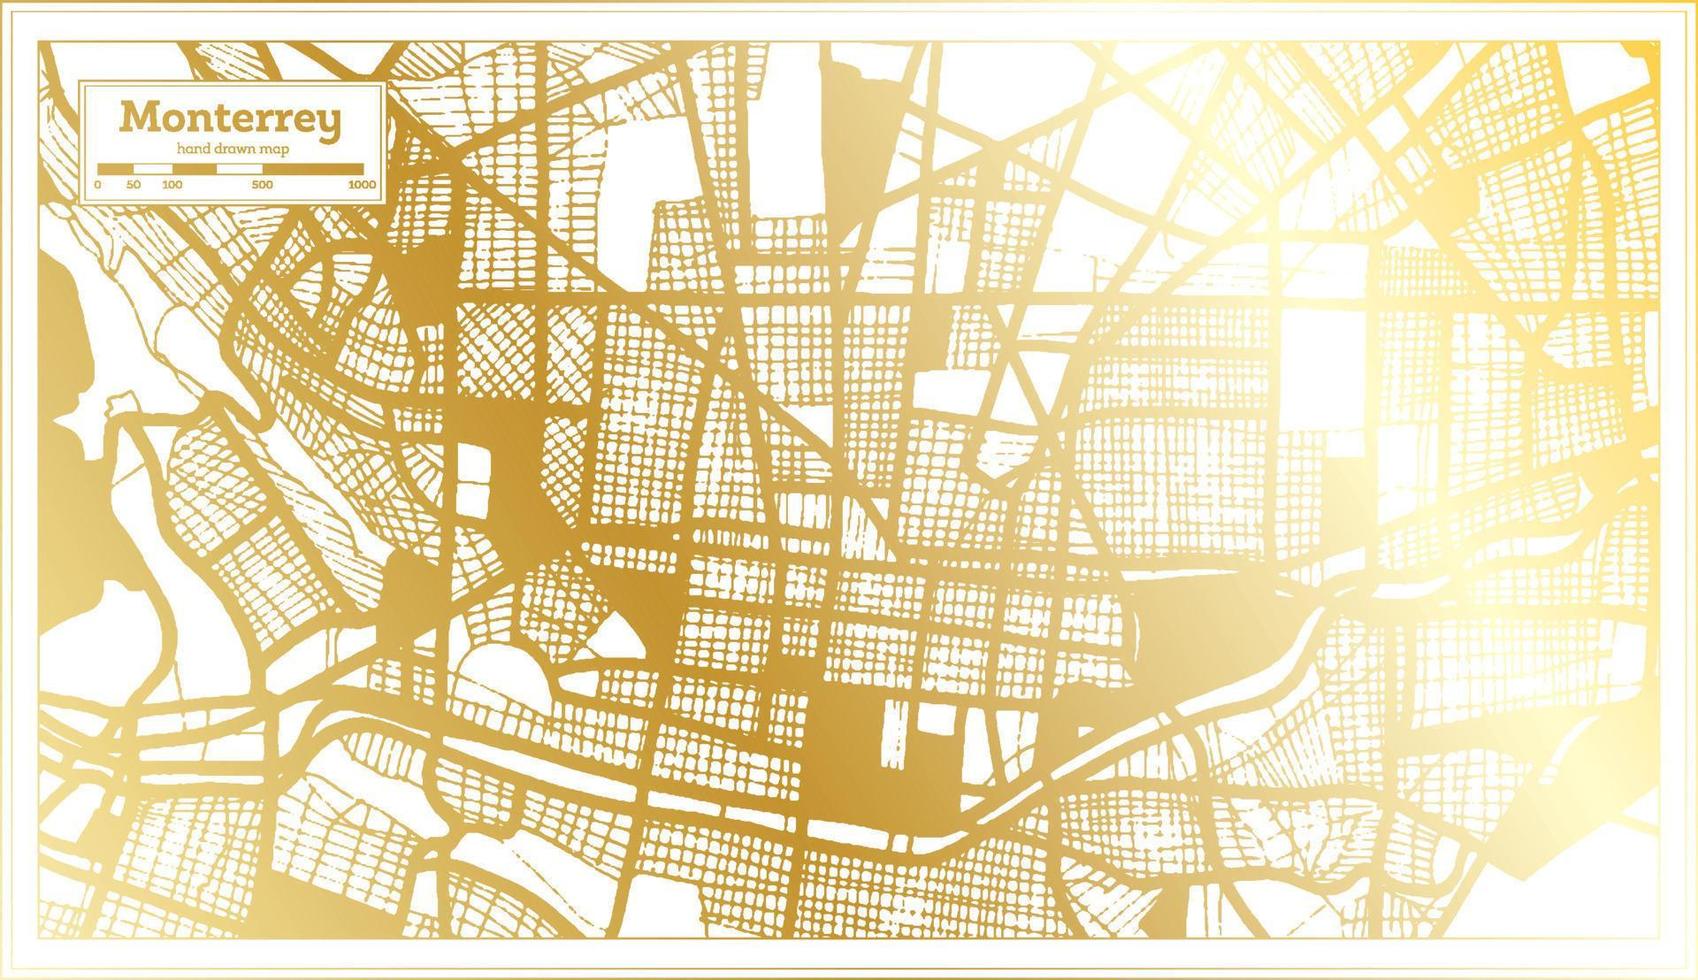 mapa da cidade de monterrey méxico em estilo retrô na cor dourada. mapa de contorno. vetor